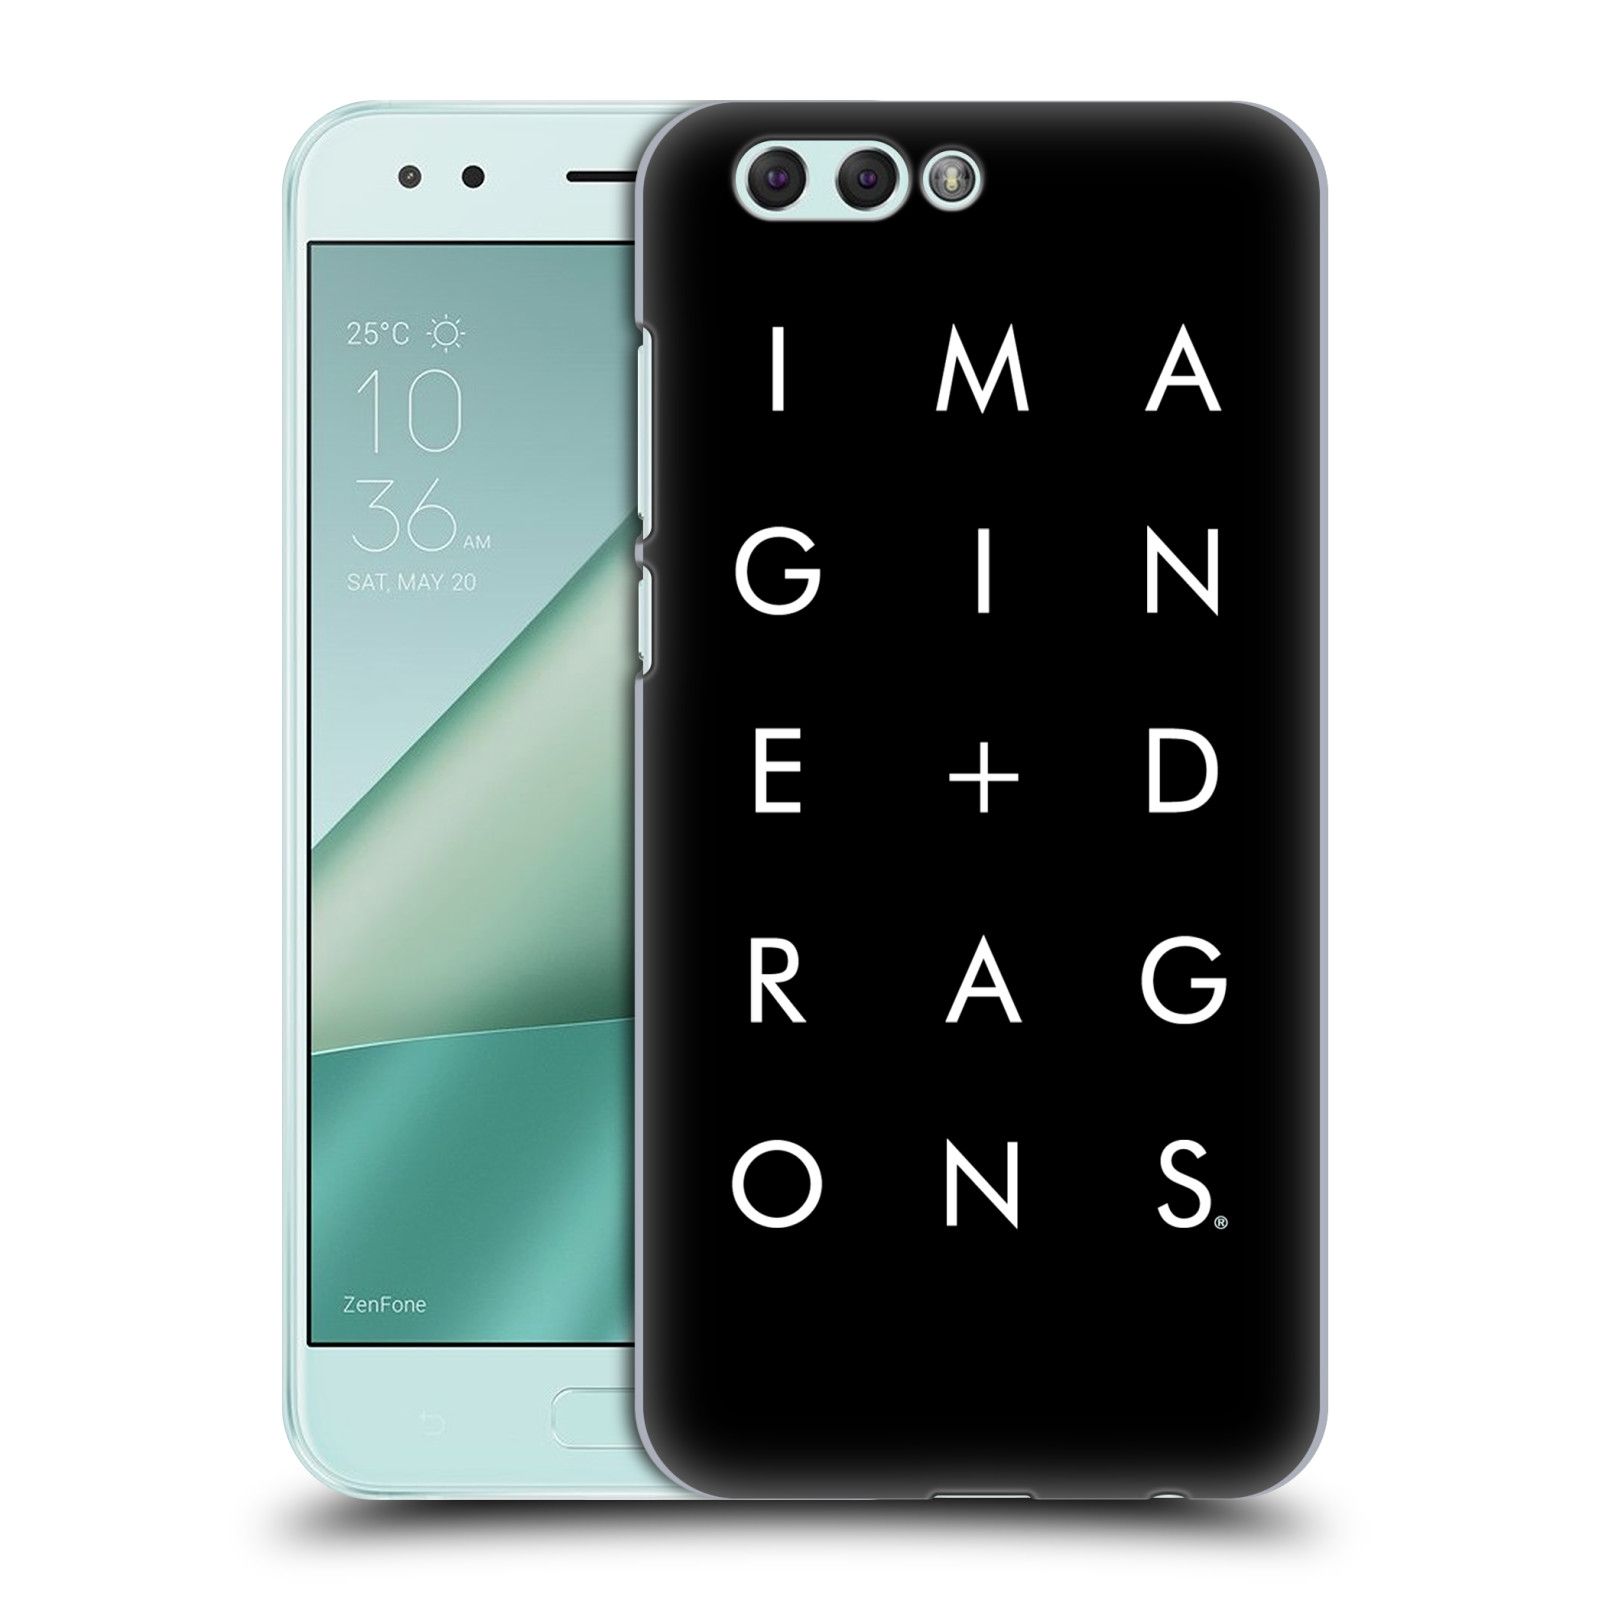 HEAD CASE plastový obal na mobil Asus Zenfone 4 ZE554KL hudební skupina Imagine Dragons logo